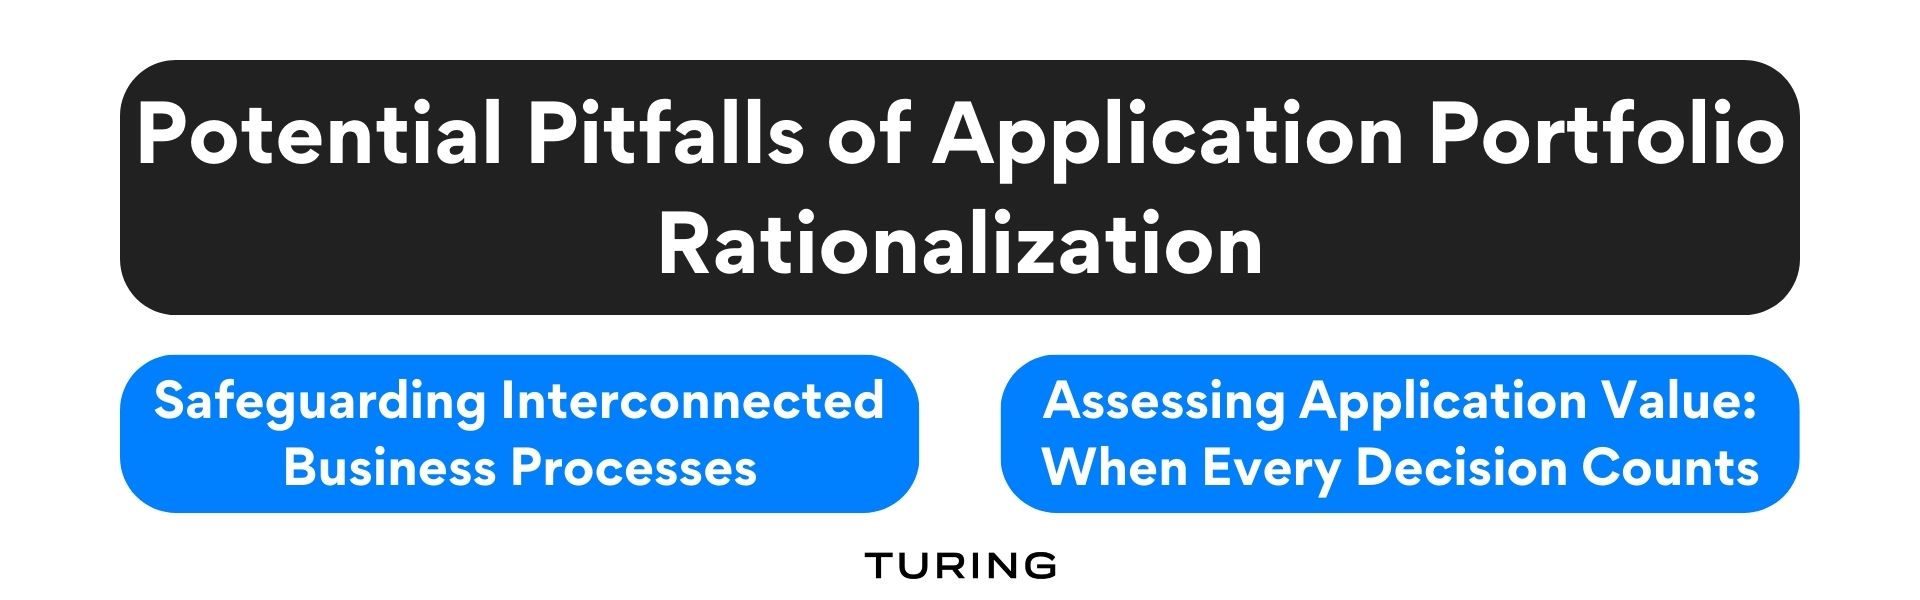 Potential Pitfalls of Application Portfolio Rationalization